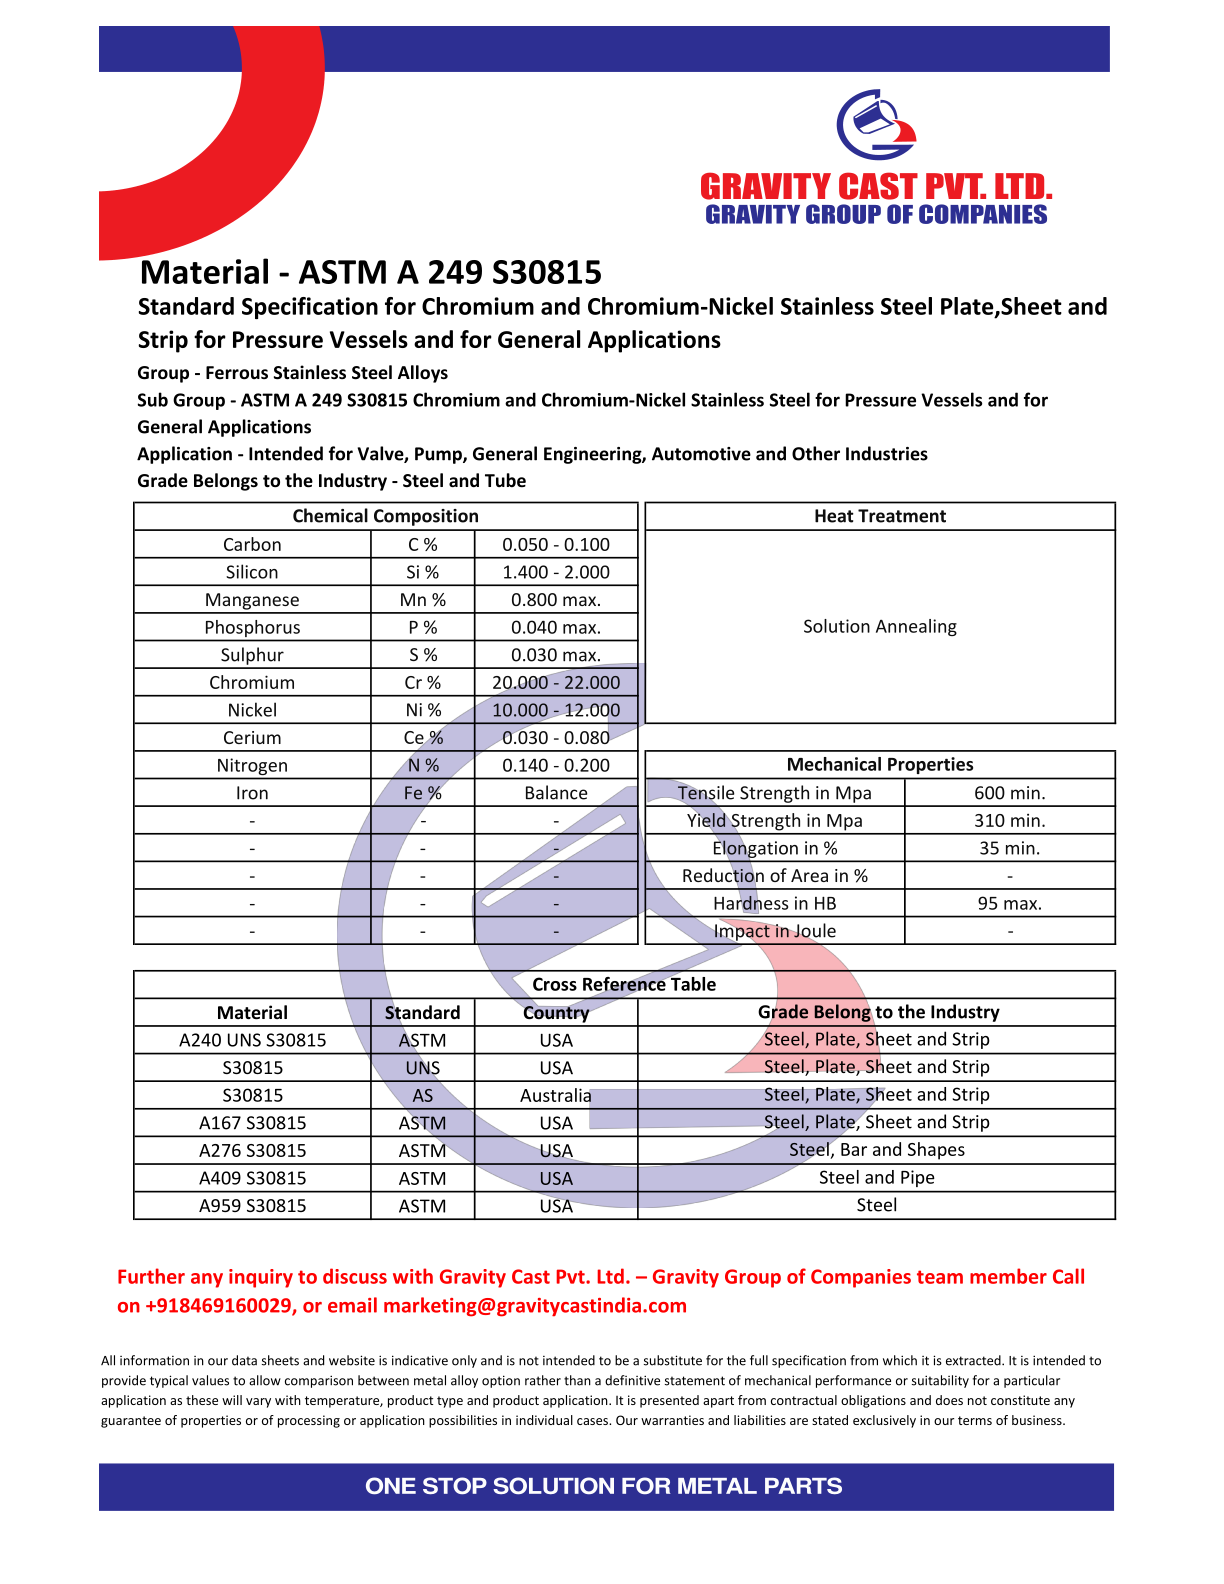 ASTM A 249 S30815.pdf